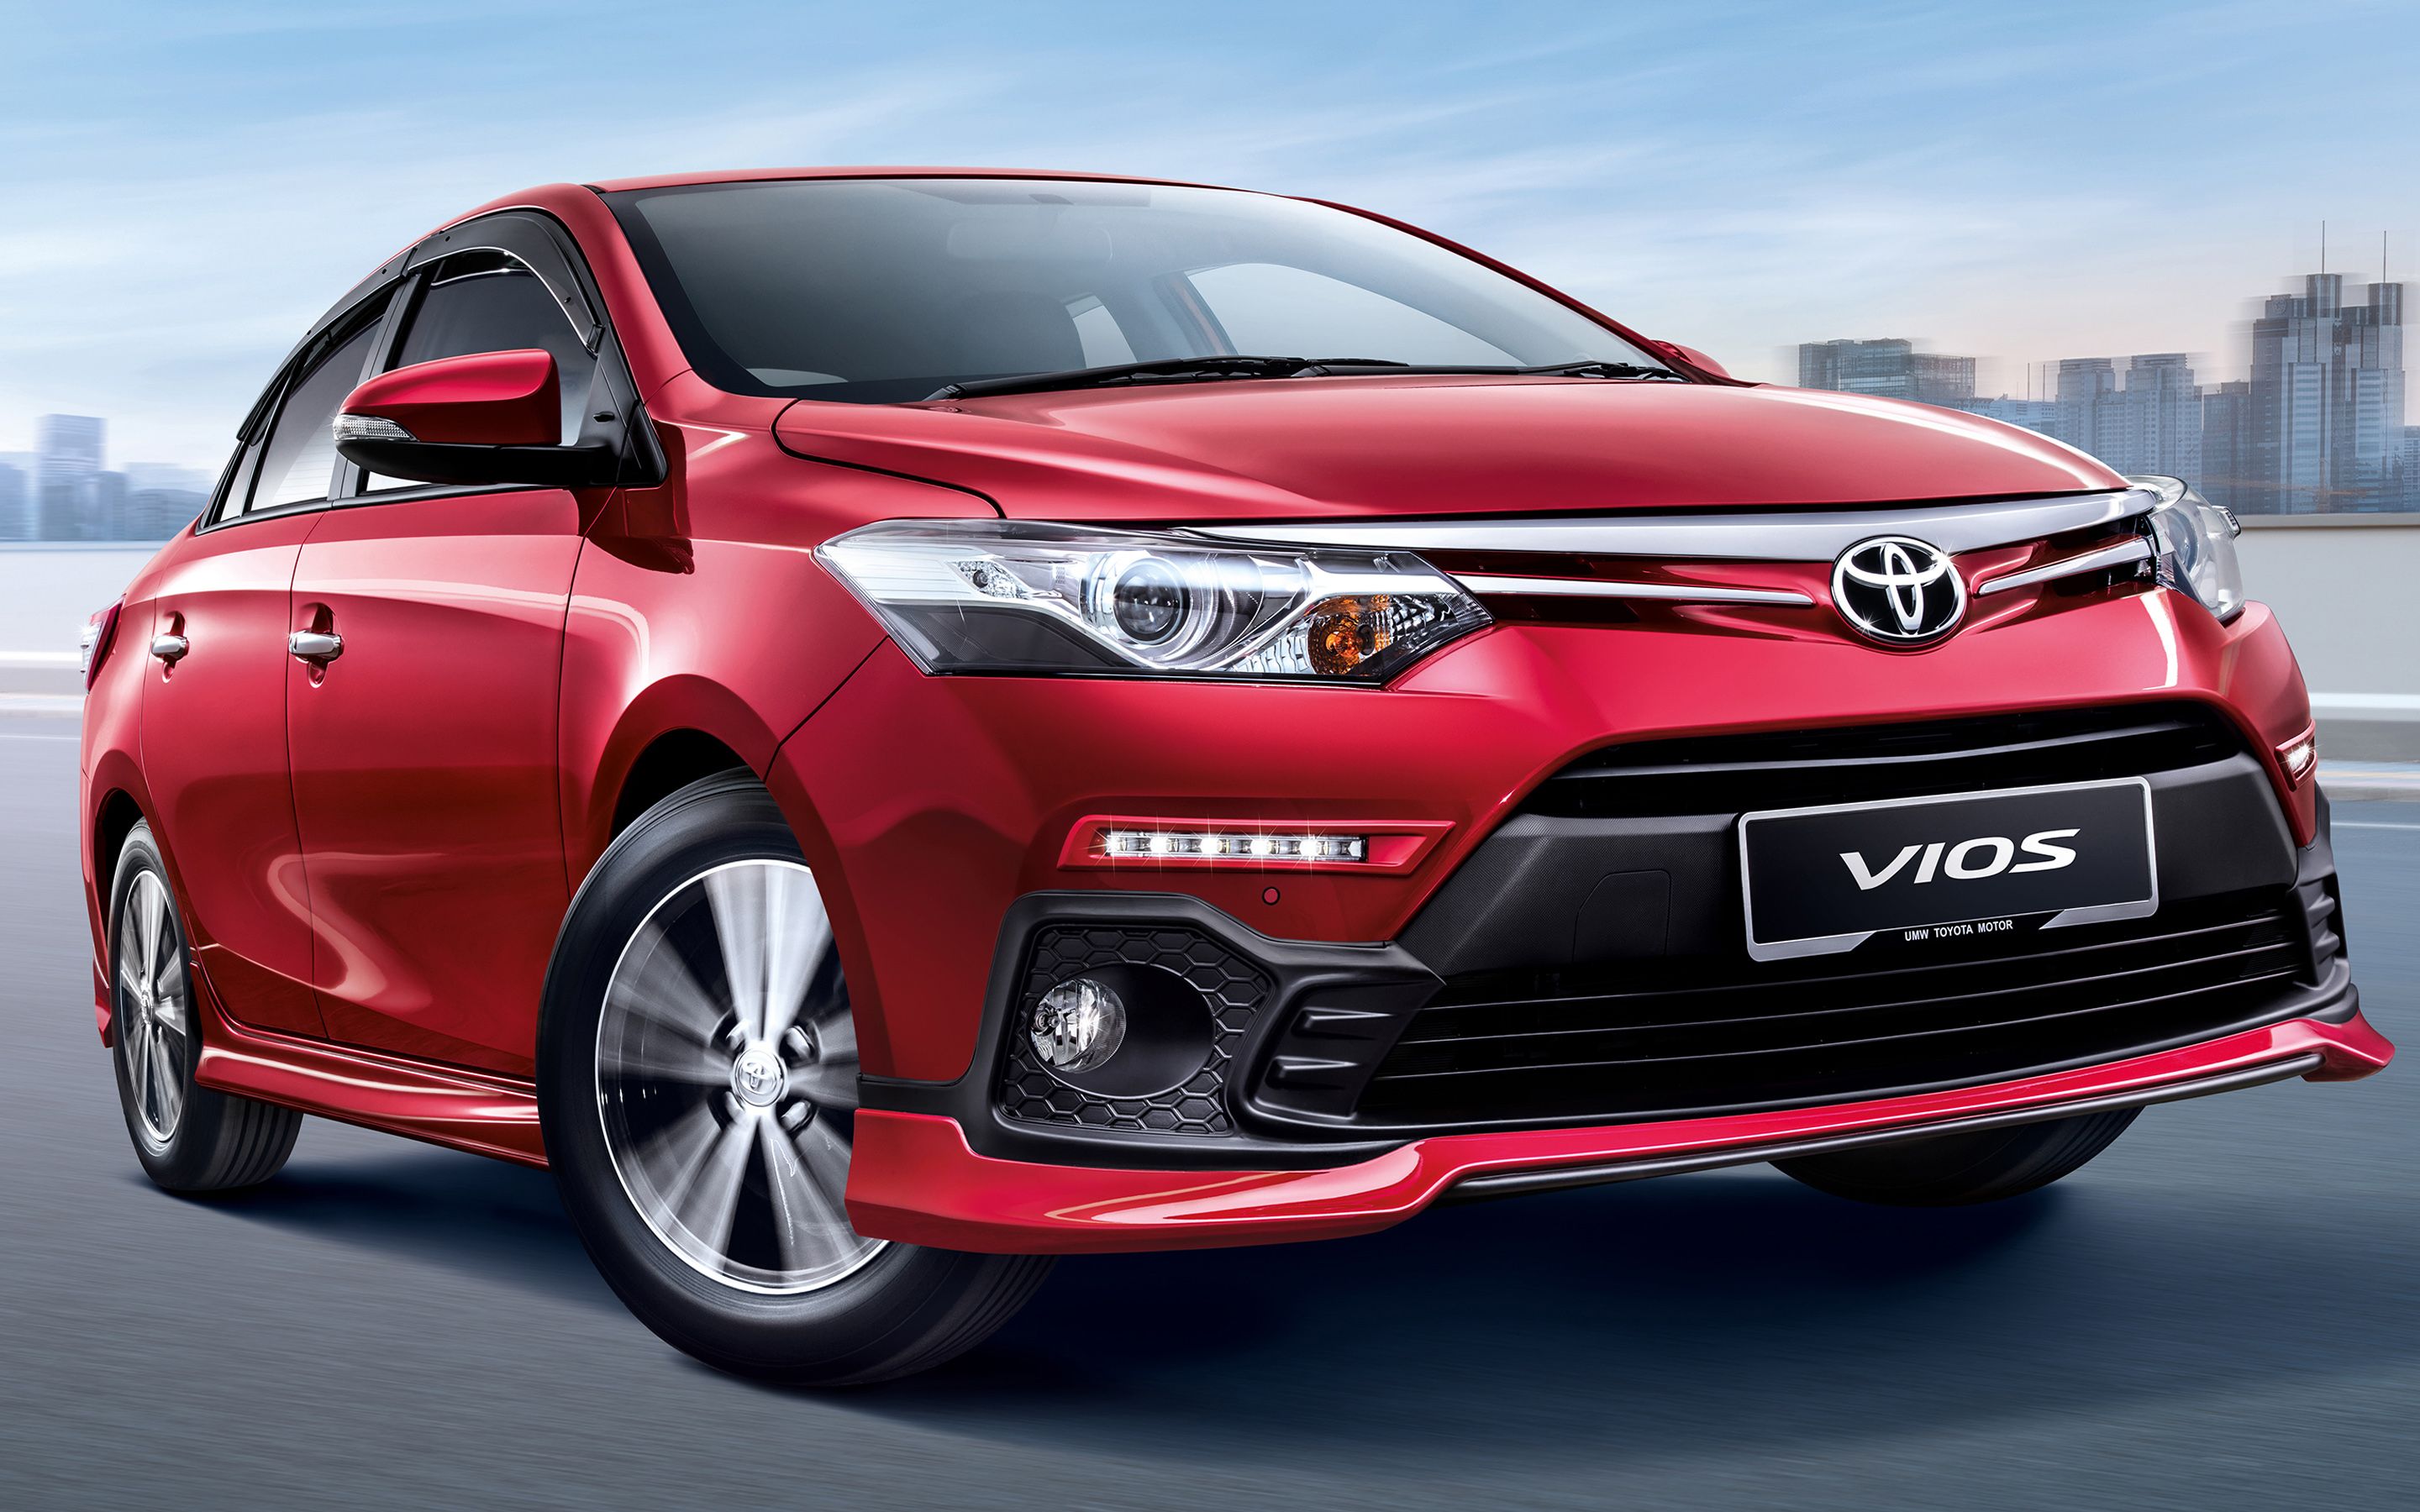 Download wallpaper Toyota Vios, 2018 cars, subcompact sedan, new